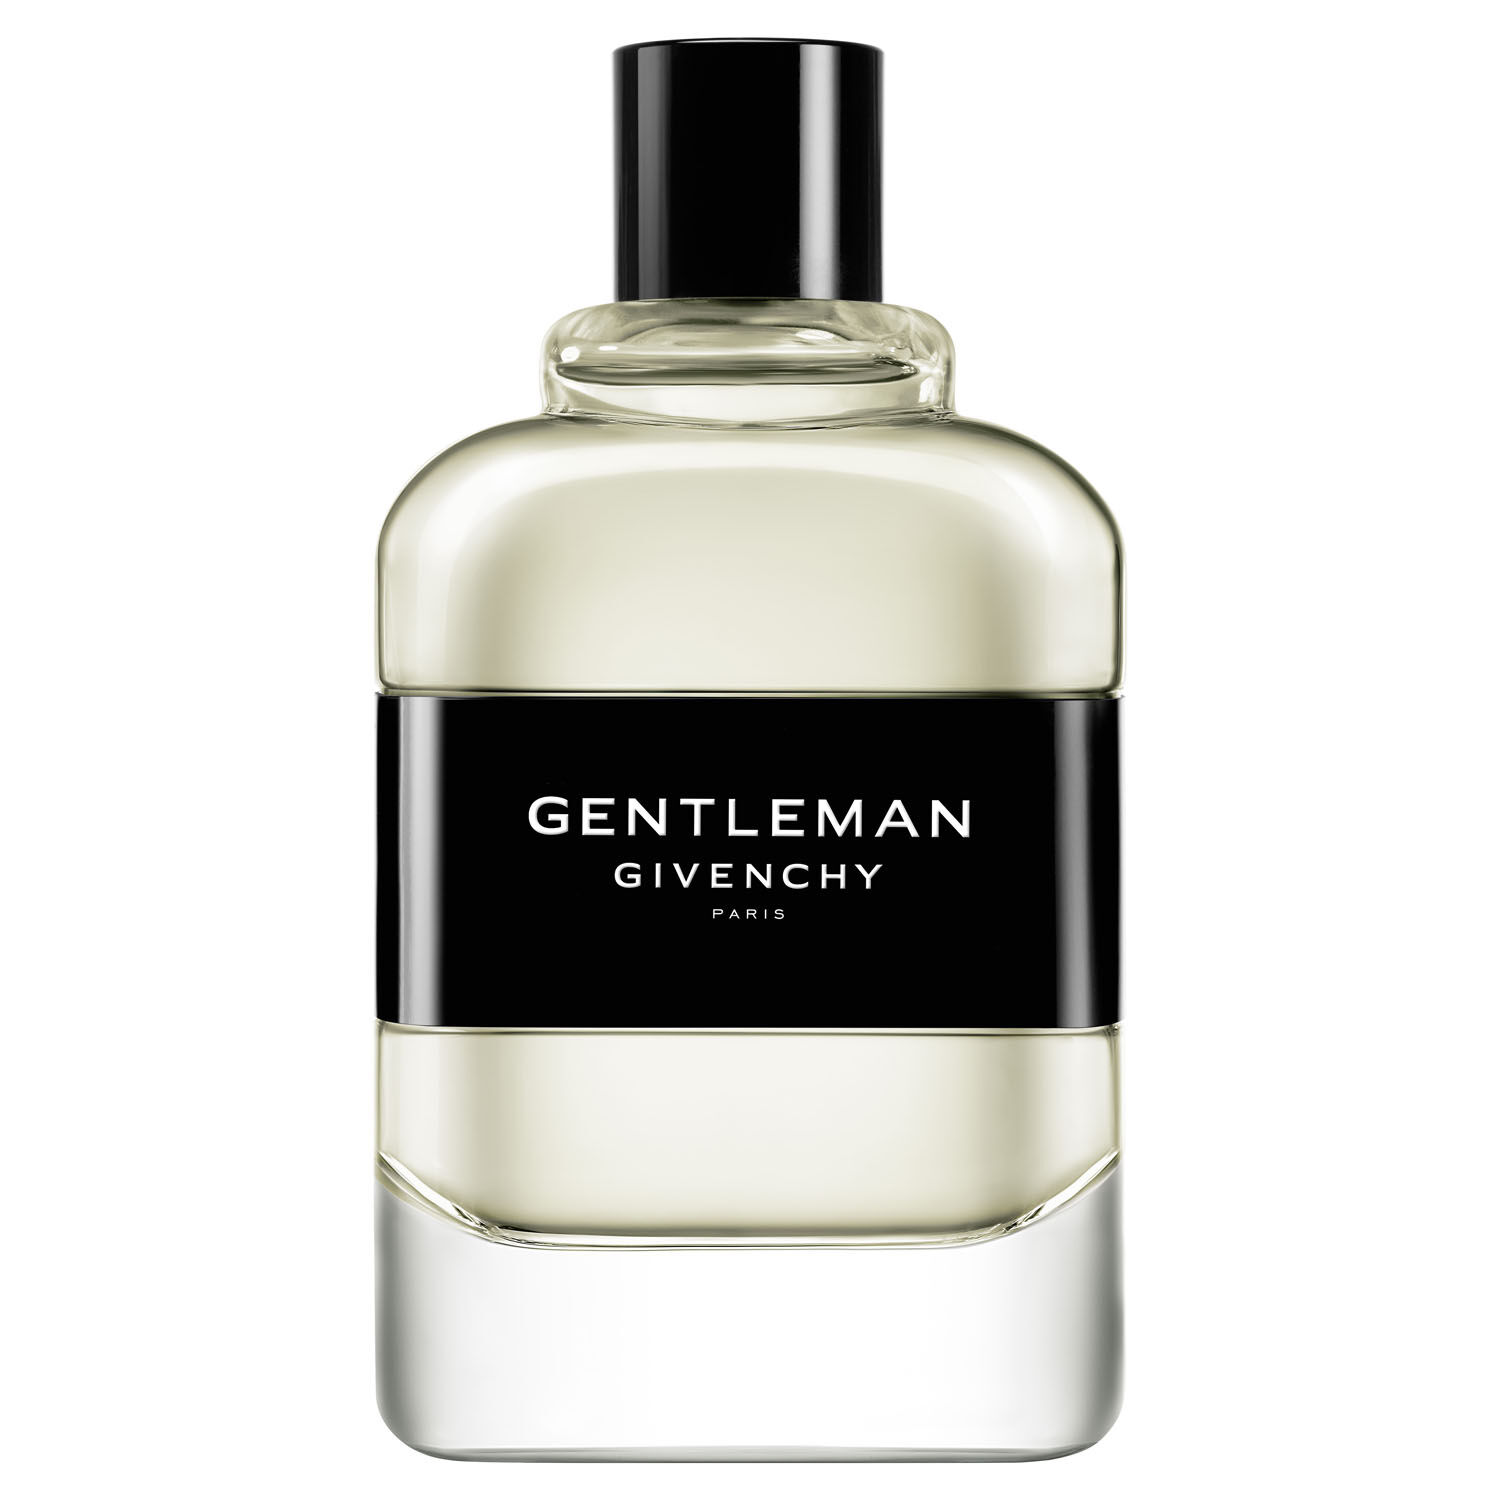 givenchy gentlemen only parfum